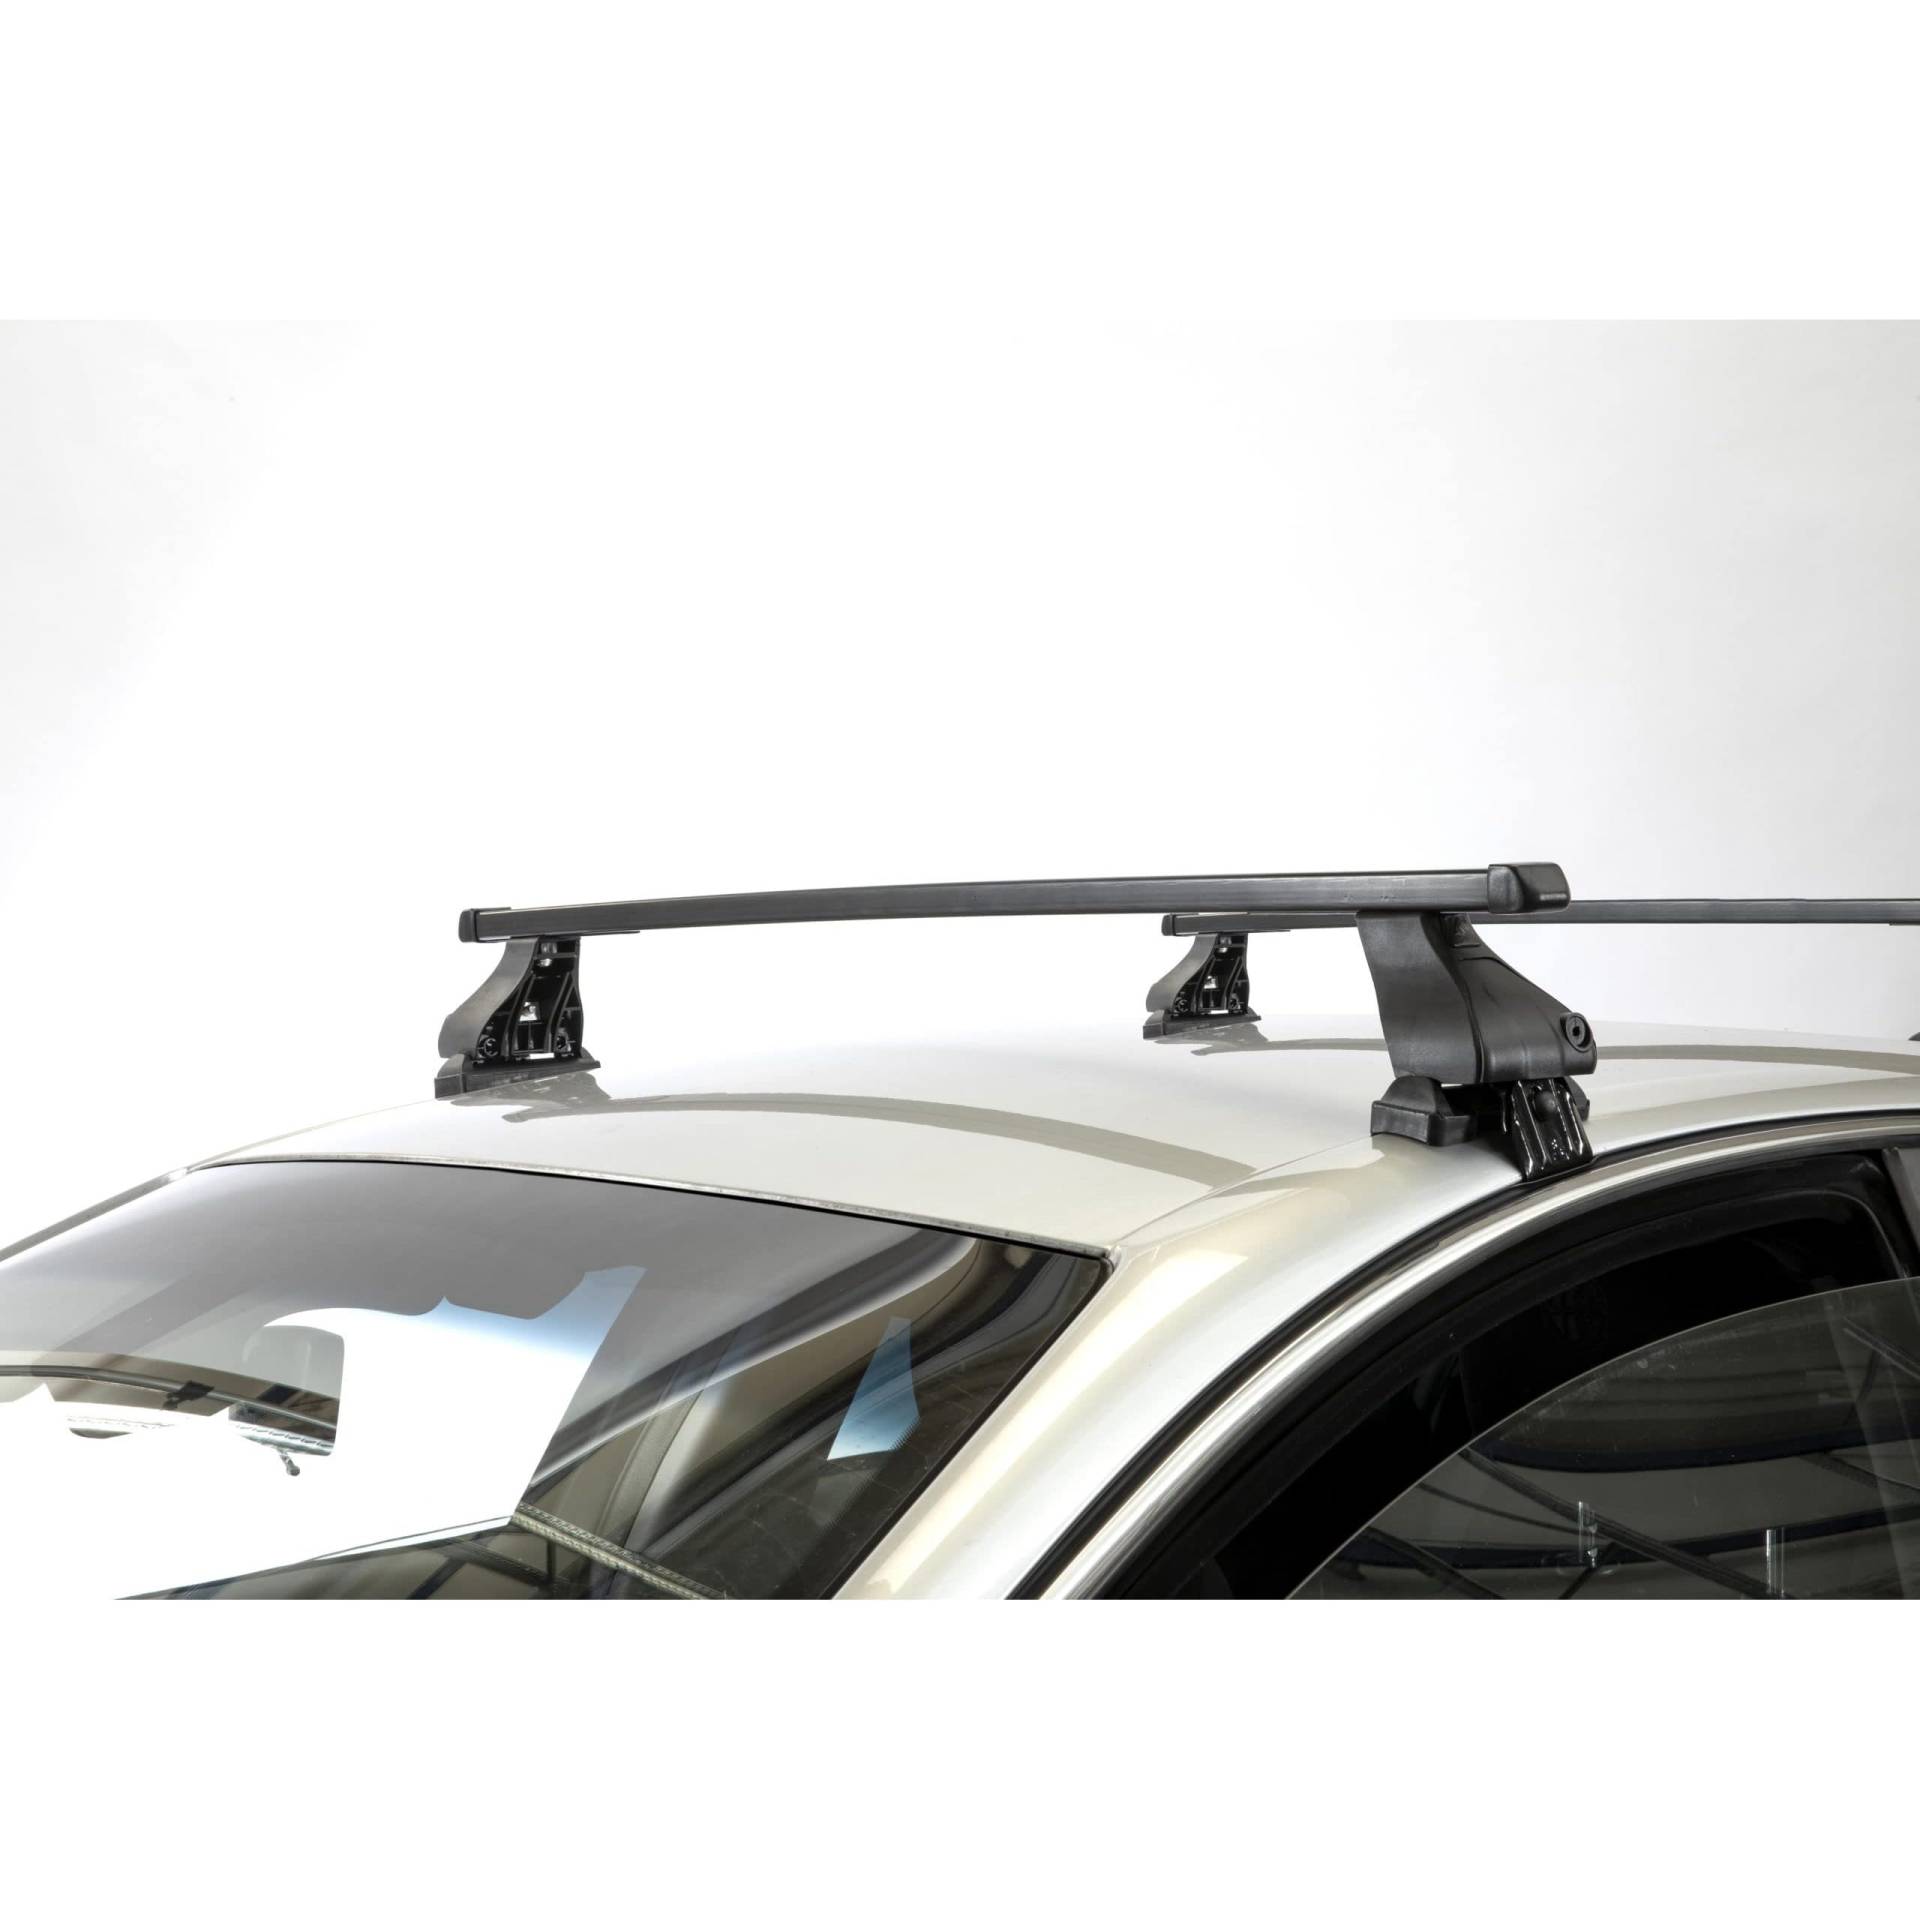 Dachgepäckträger Querträger, für Peugeot 308 (5 doors) 2014-2021 Aluminium Dachgepäckträger Querträger Cargo Gepackträger Dachfahrradträger von LRYQ